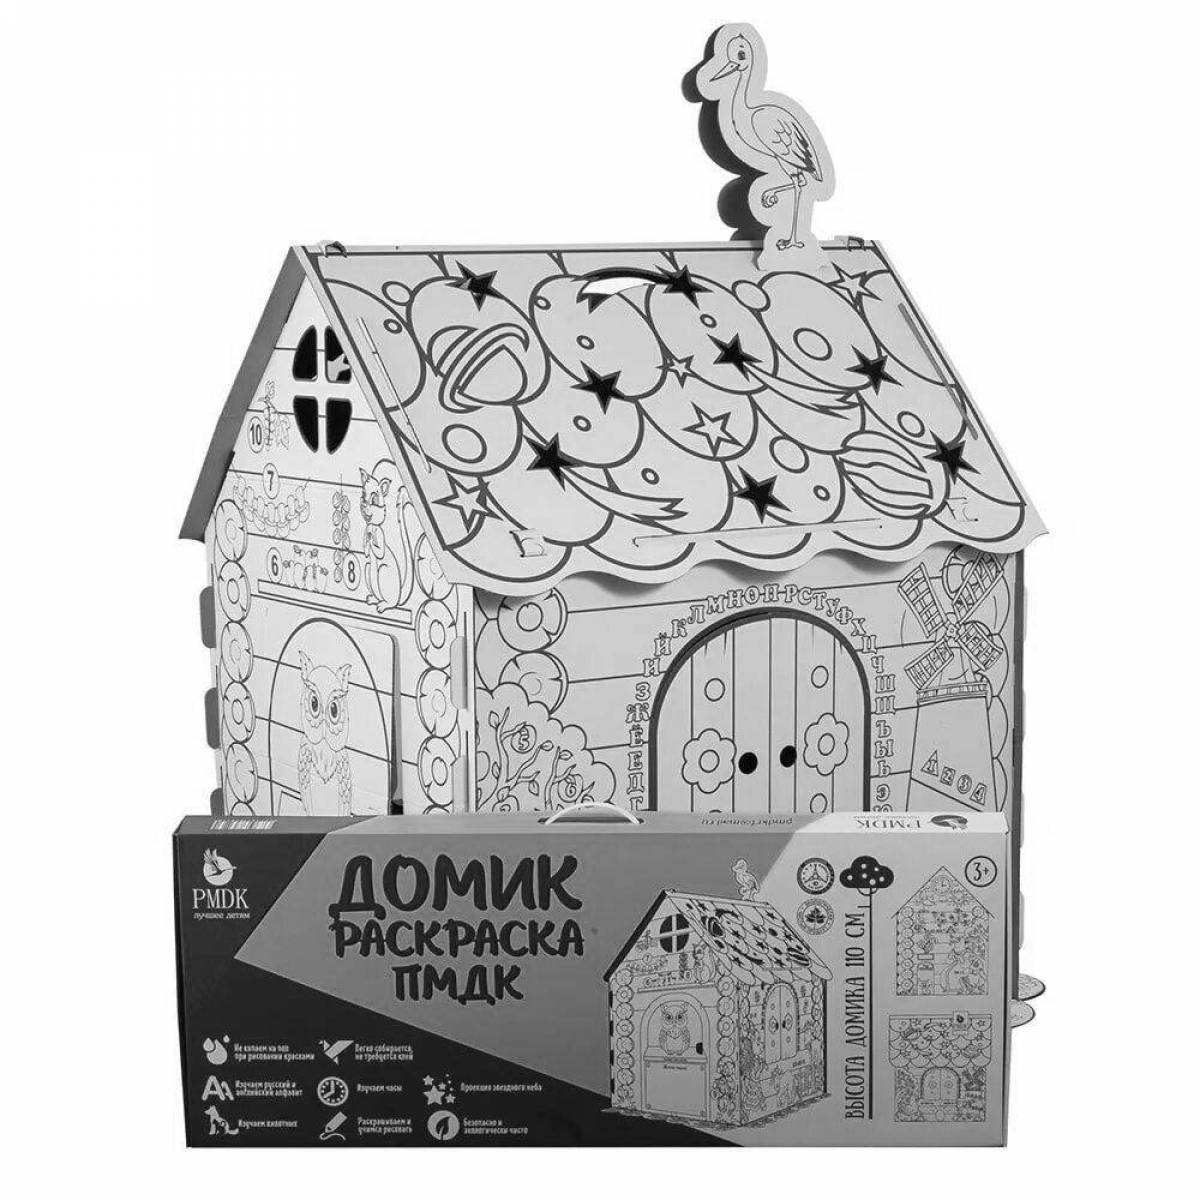 Cardboard playhouse #10